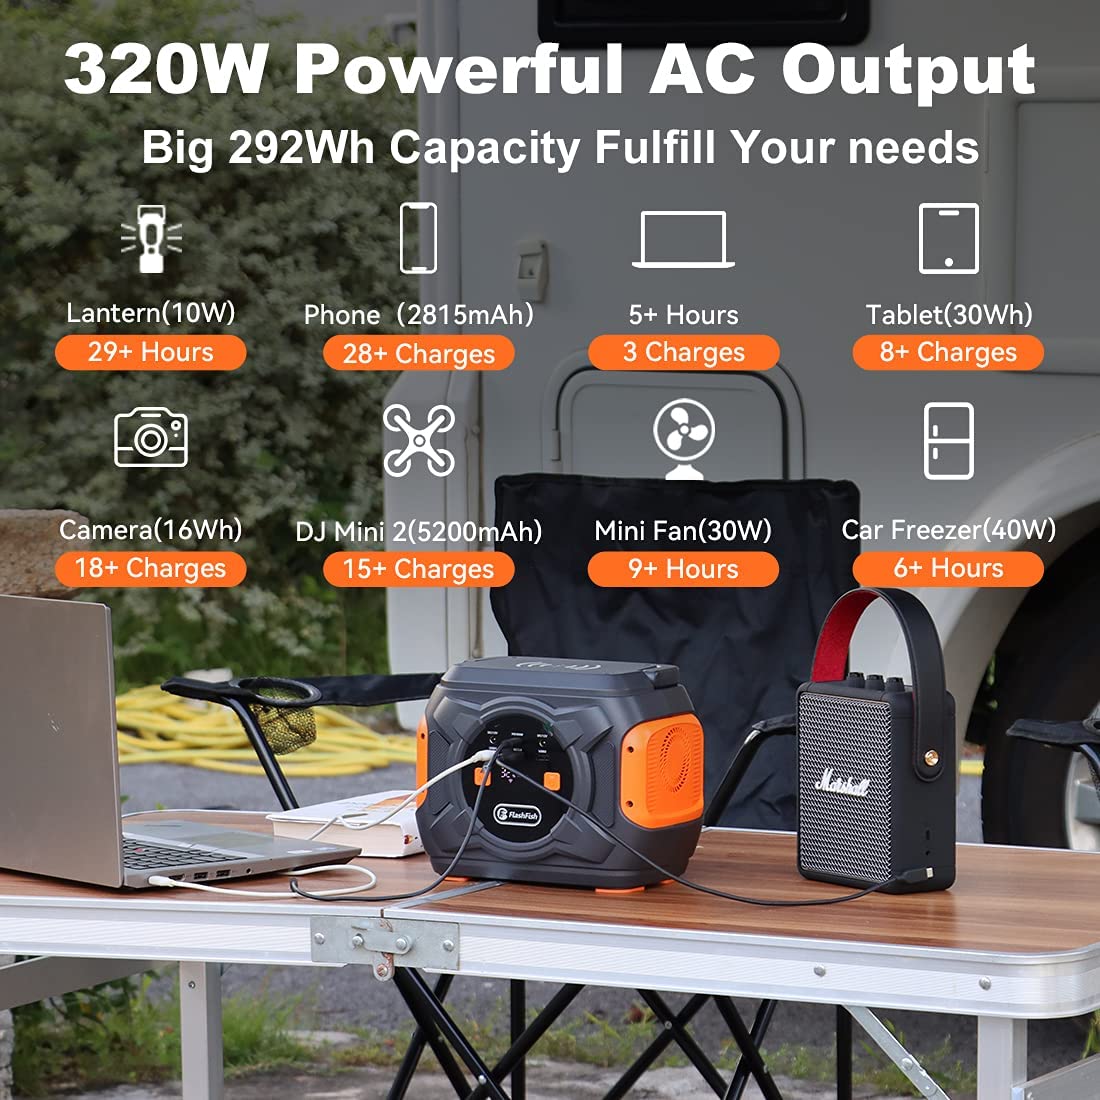 320W Powerful AC Output Big 292Wh Cap